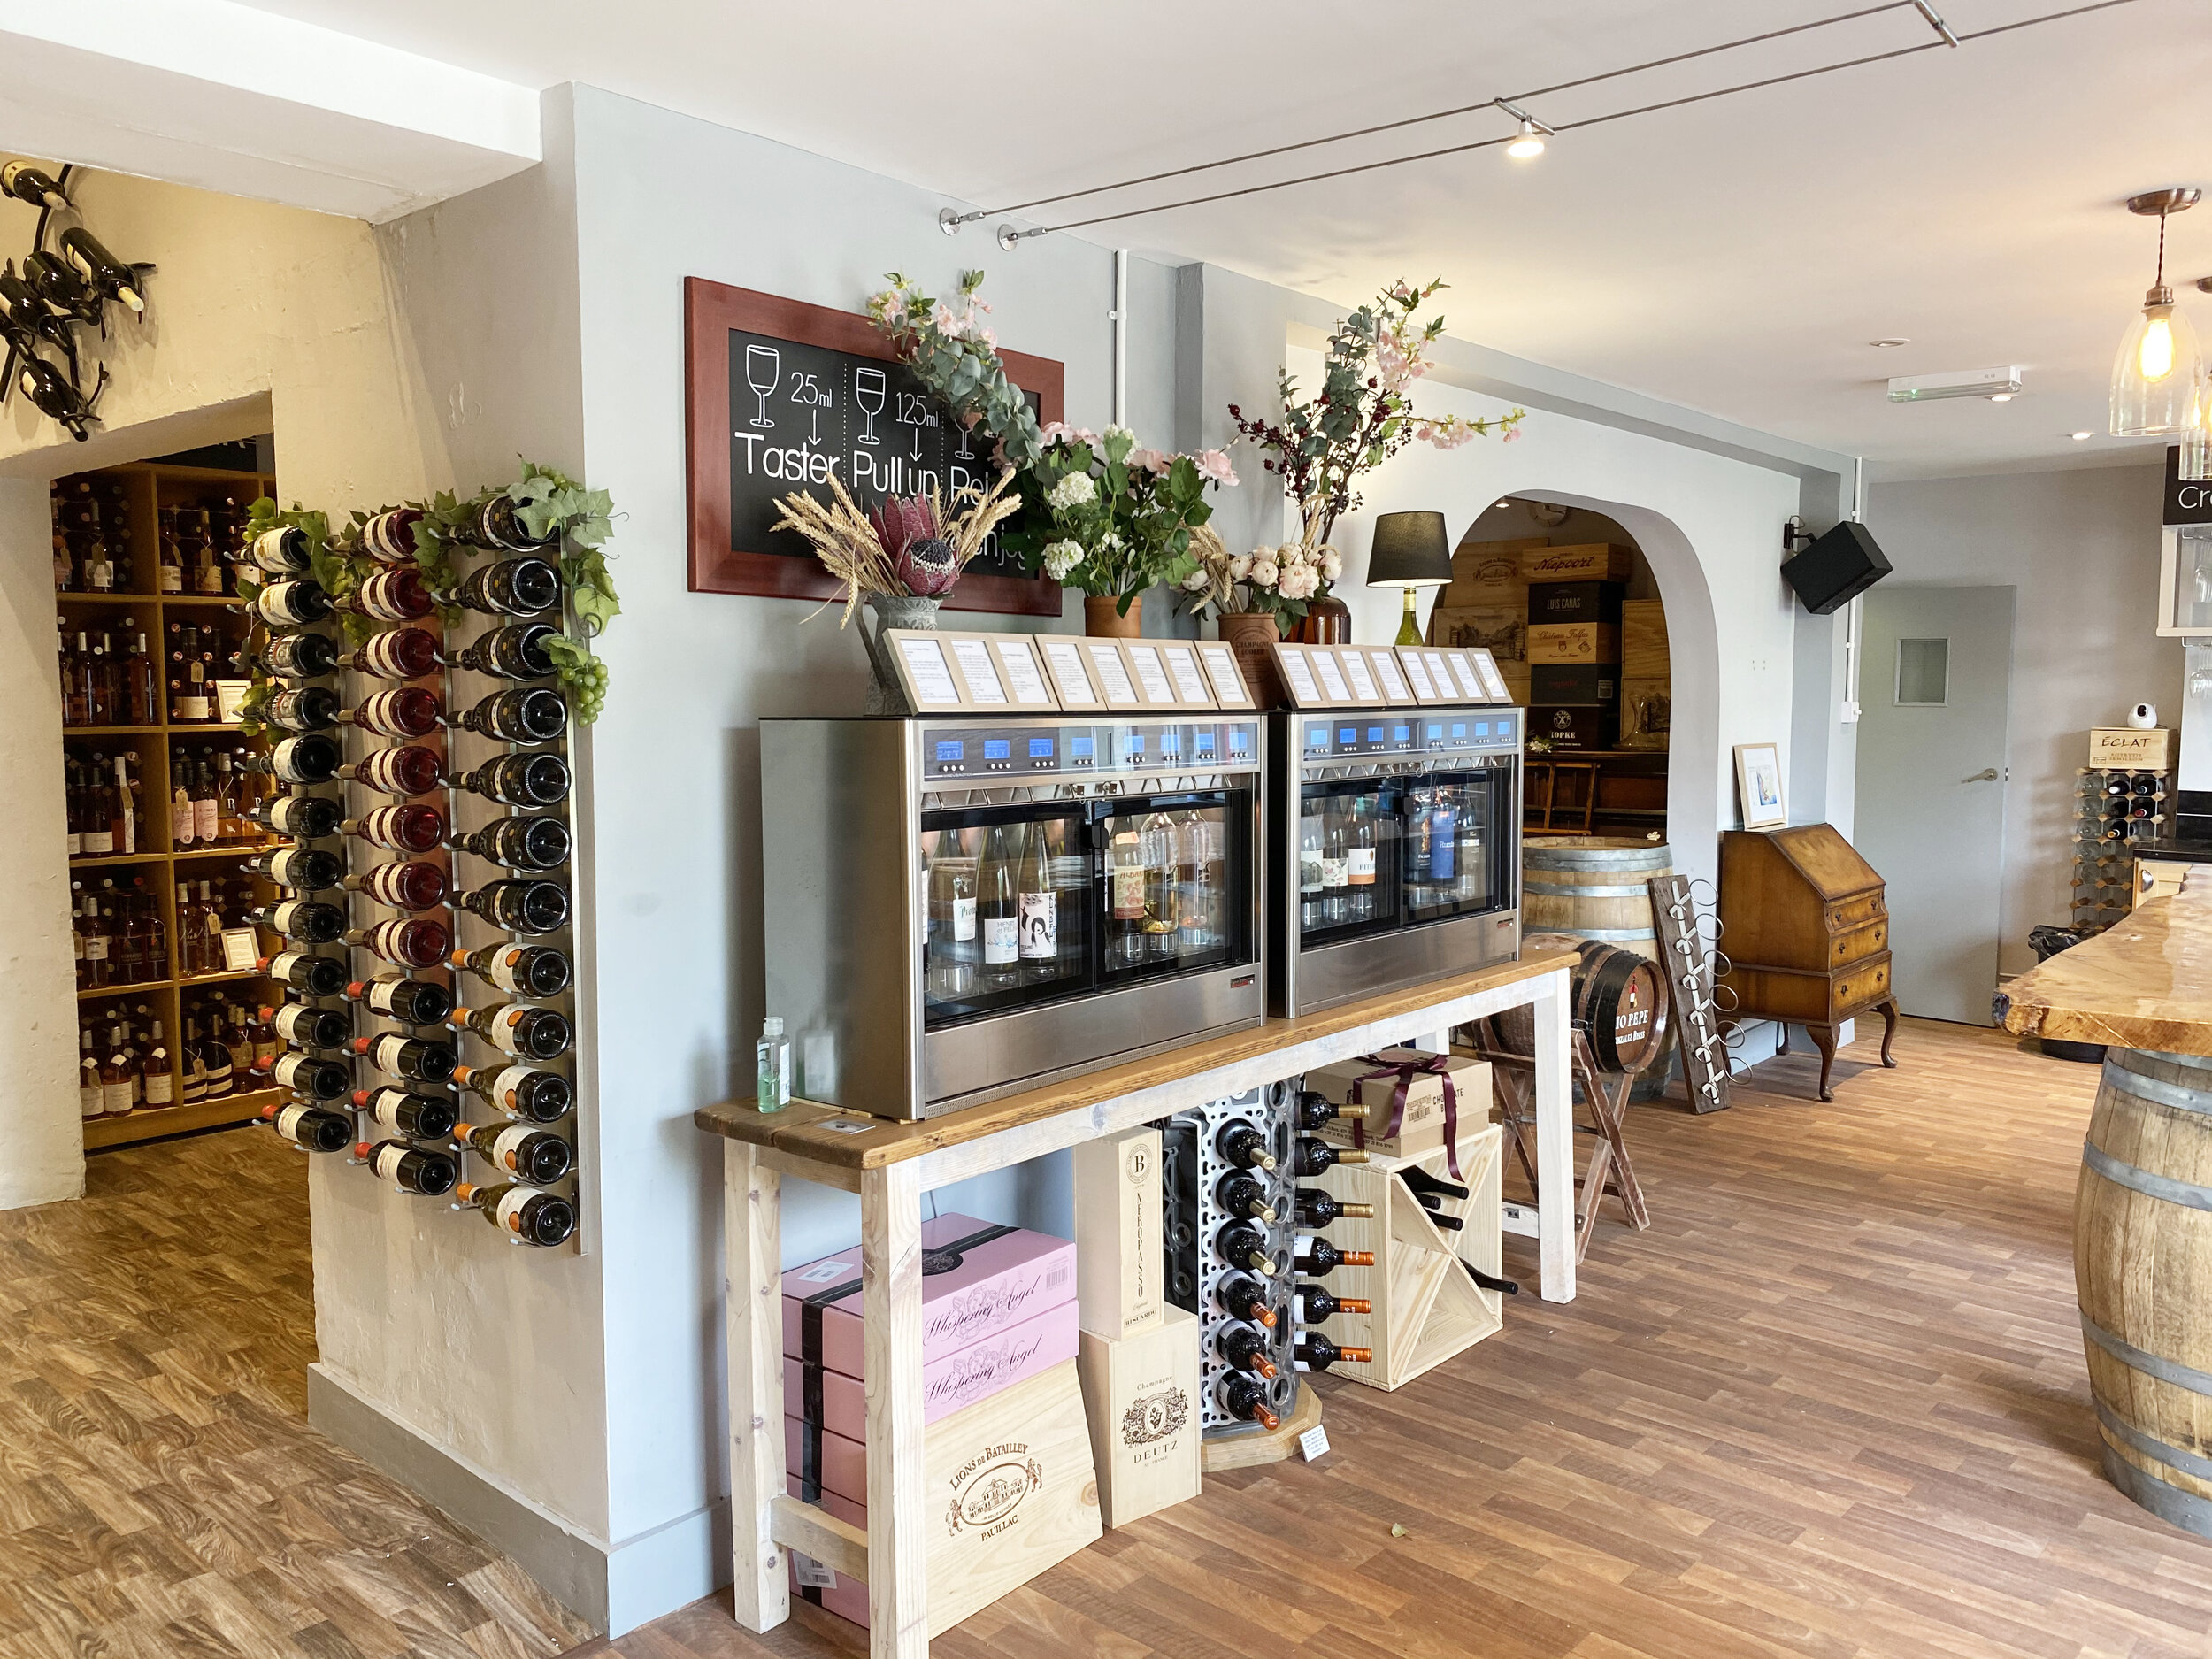 cellar doors wines wine rack merchant interior St Albans hertfordshire